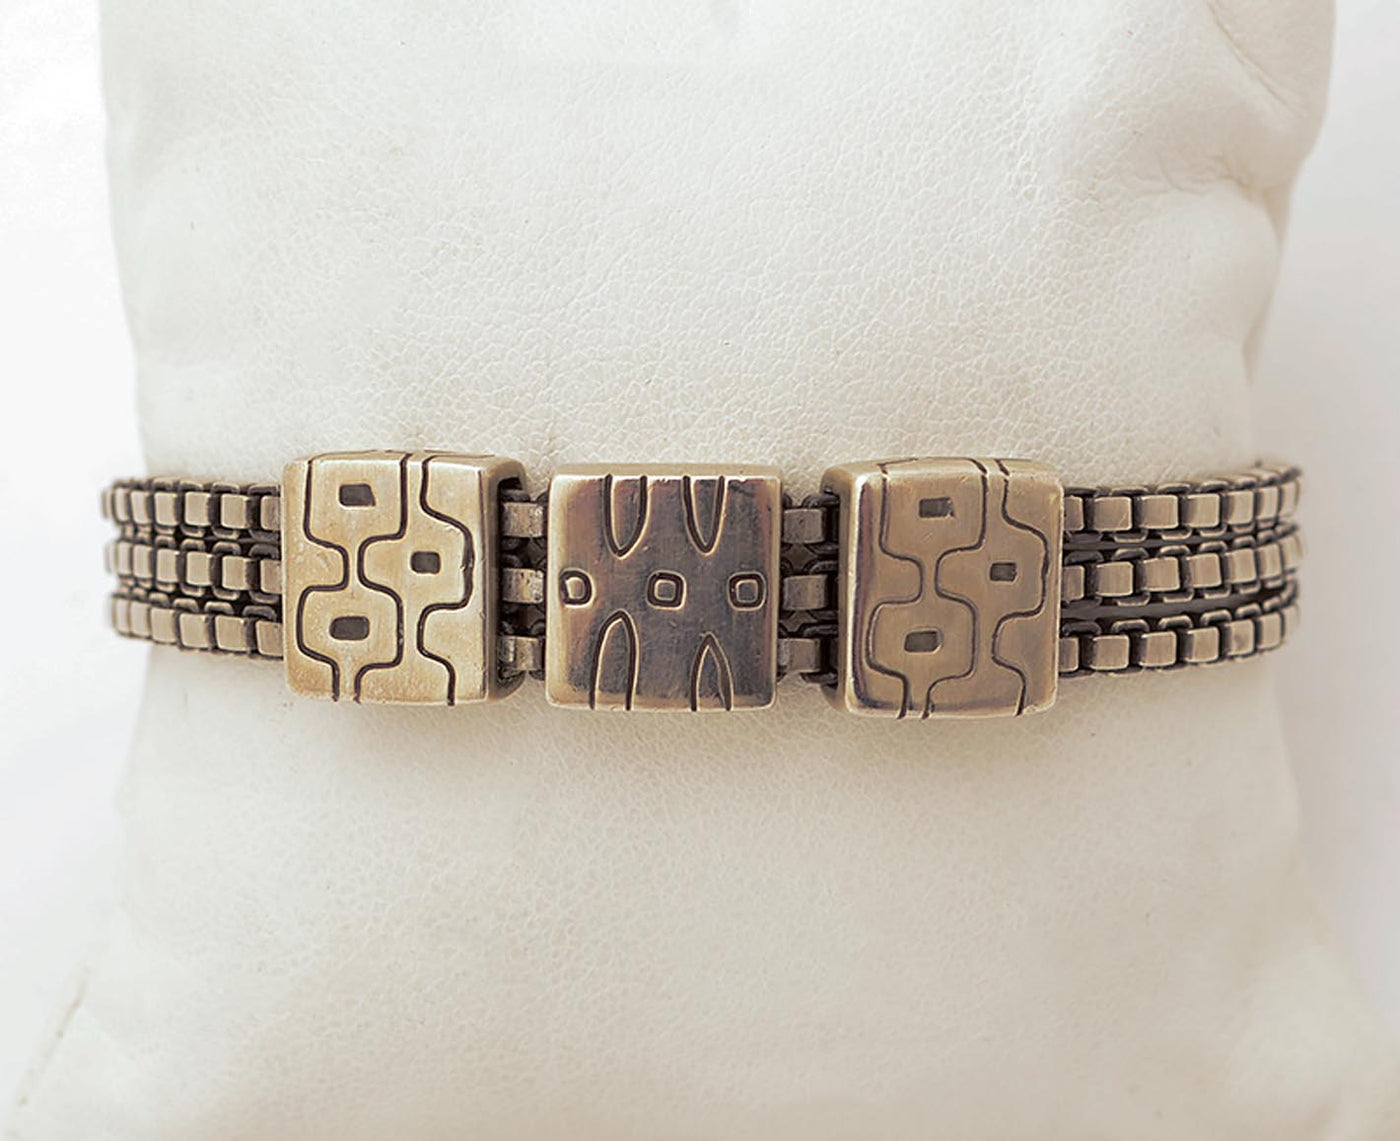 lisa-jenks-sterling-silver-bracelet-1277920-2